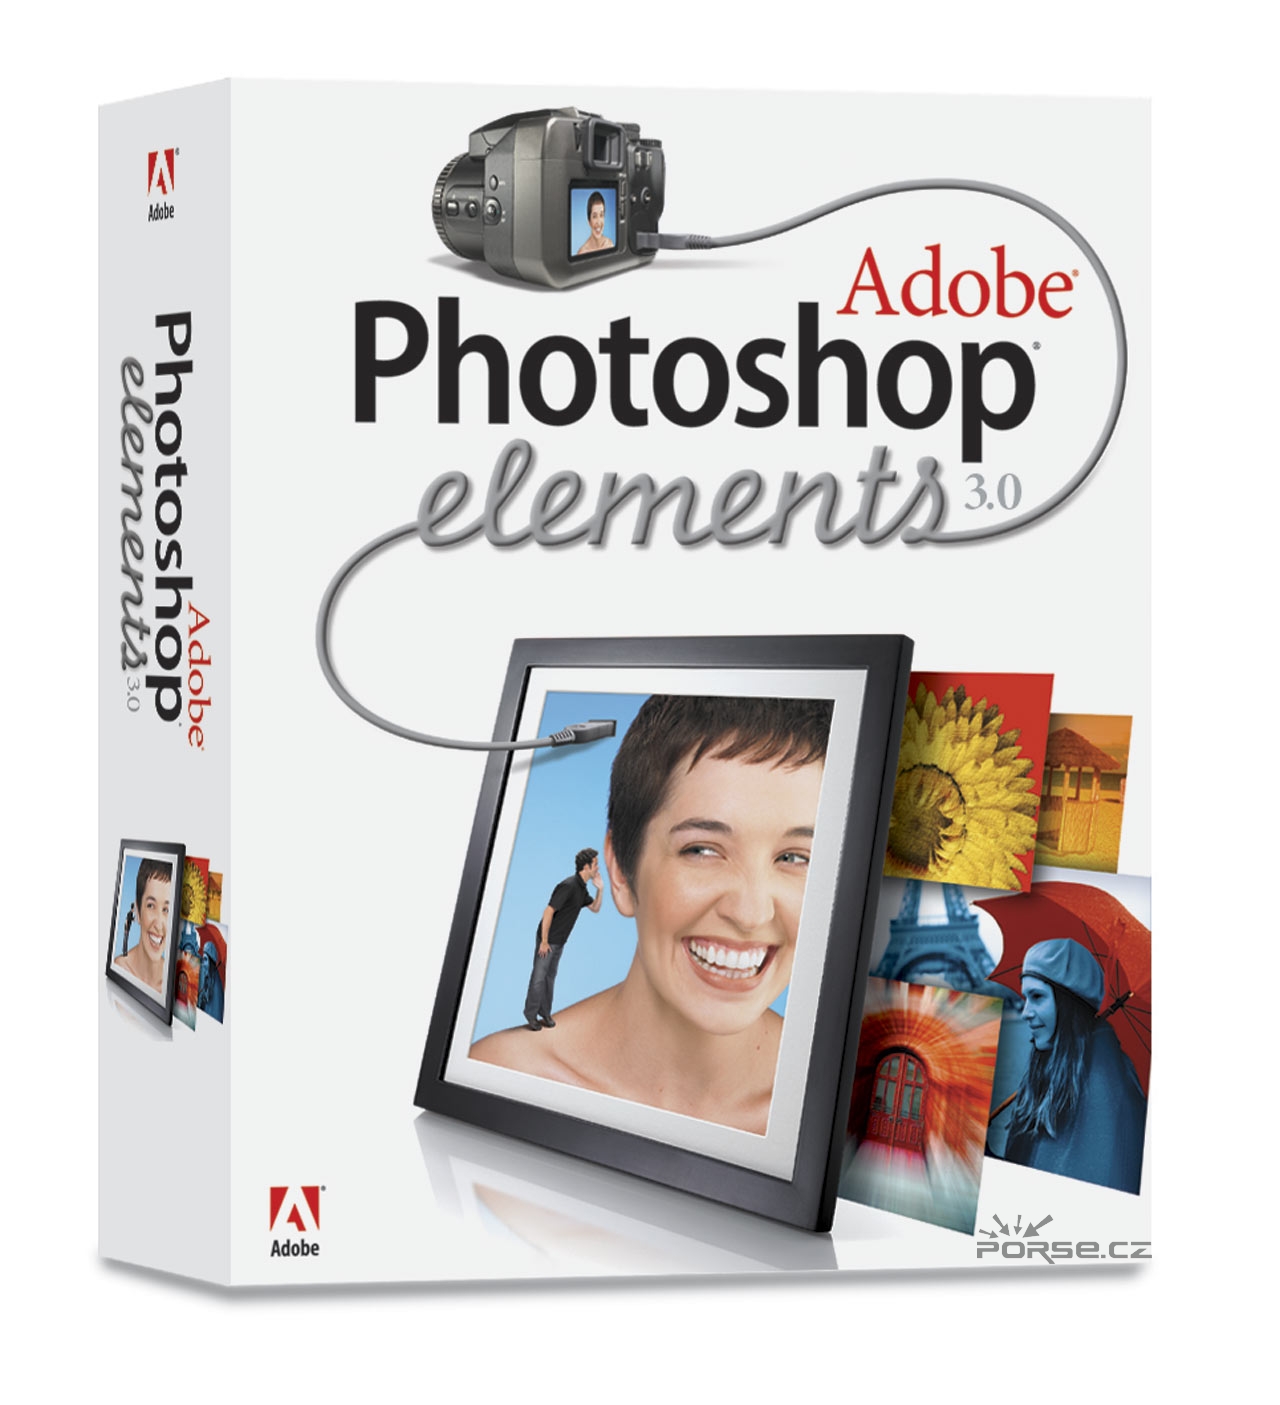 adobe photoshop elements 8.0 free download